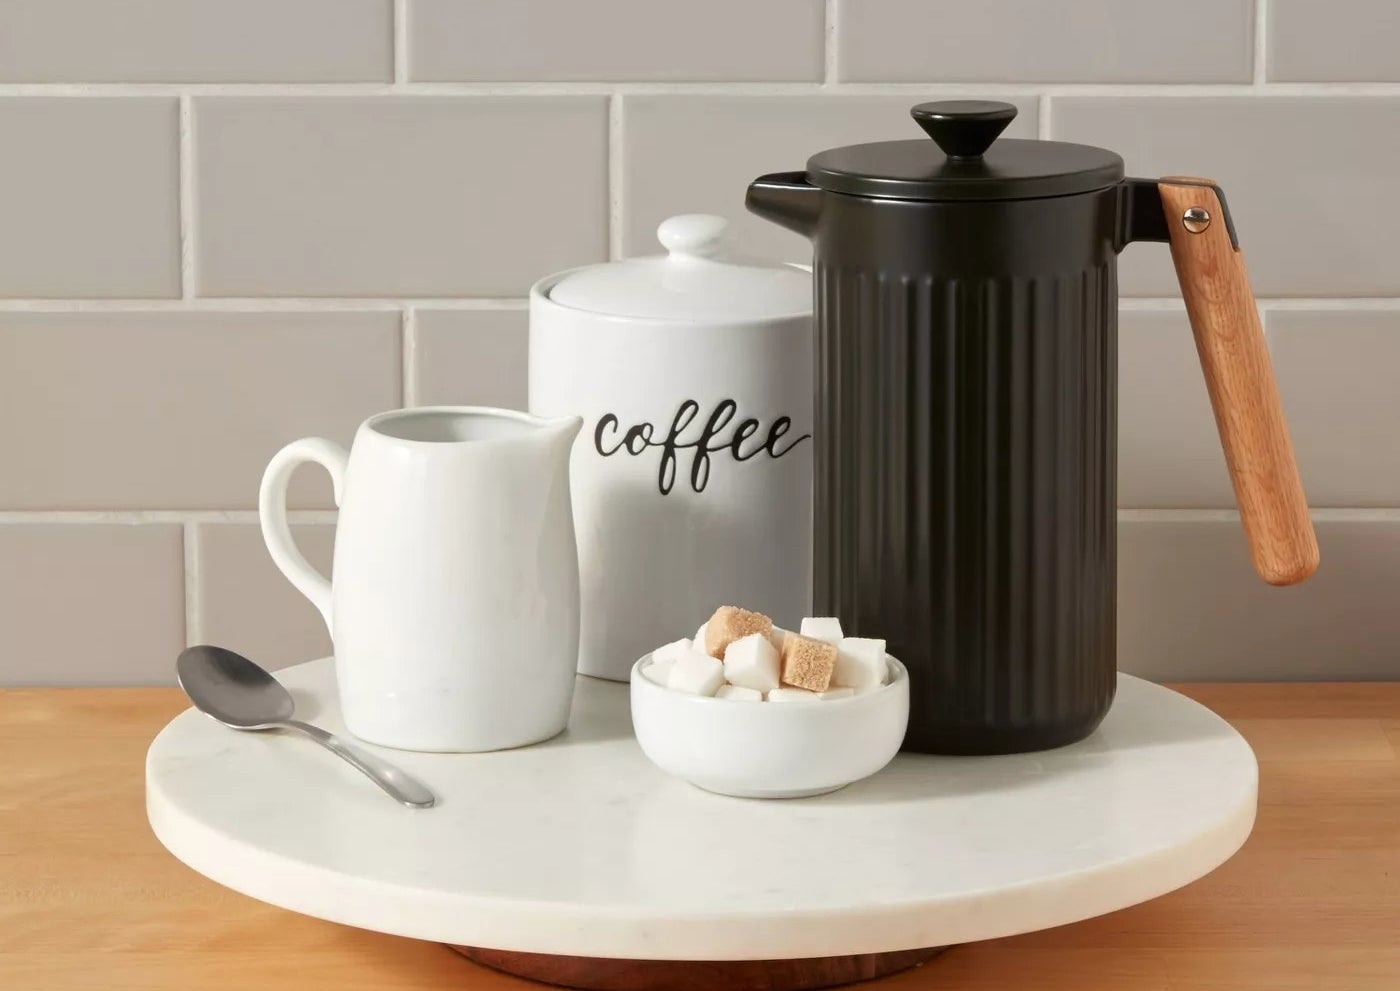 lazy susan with coffee mug and carafe on counter